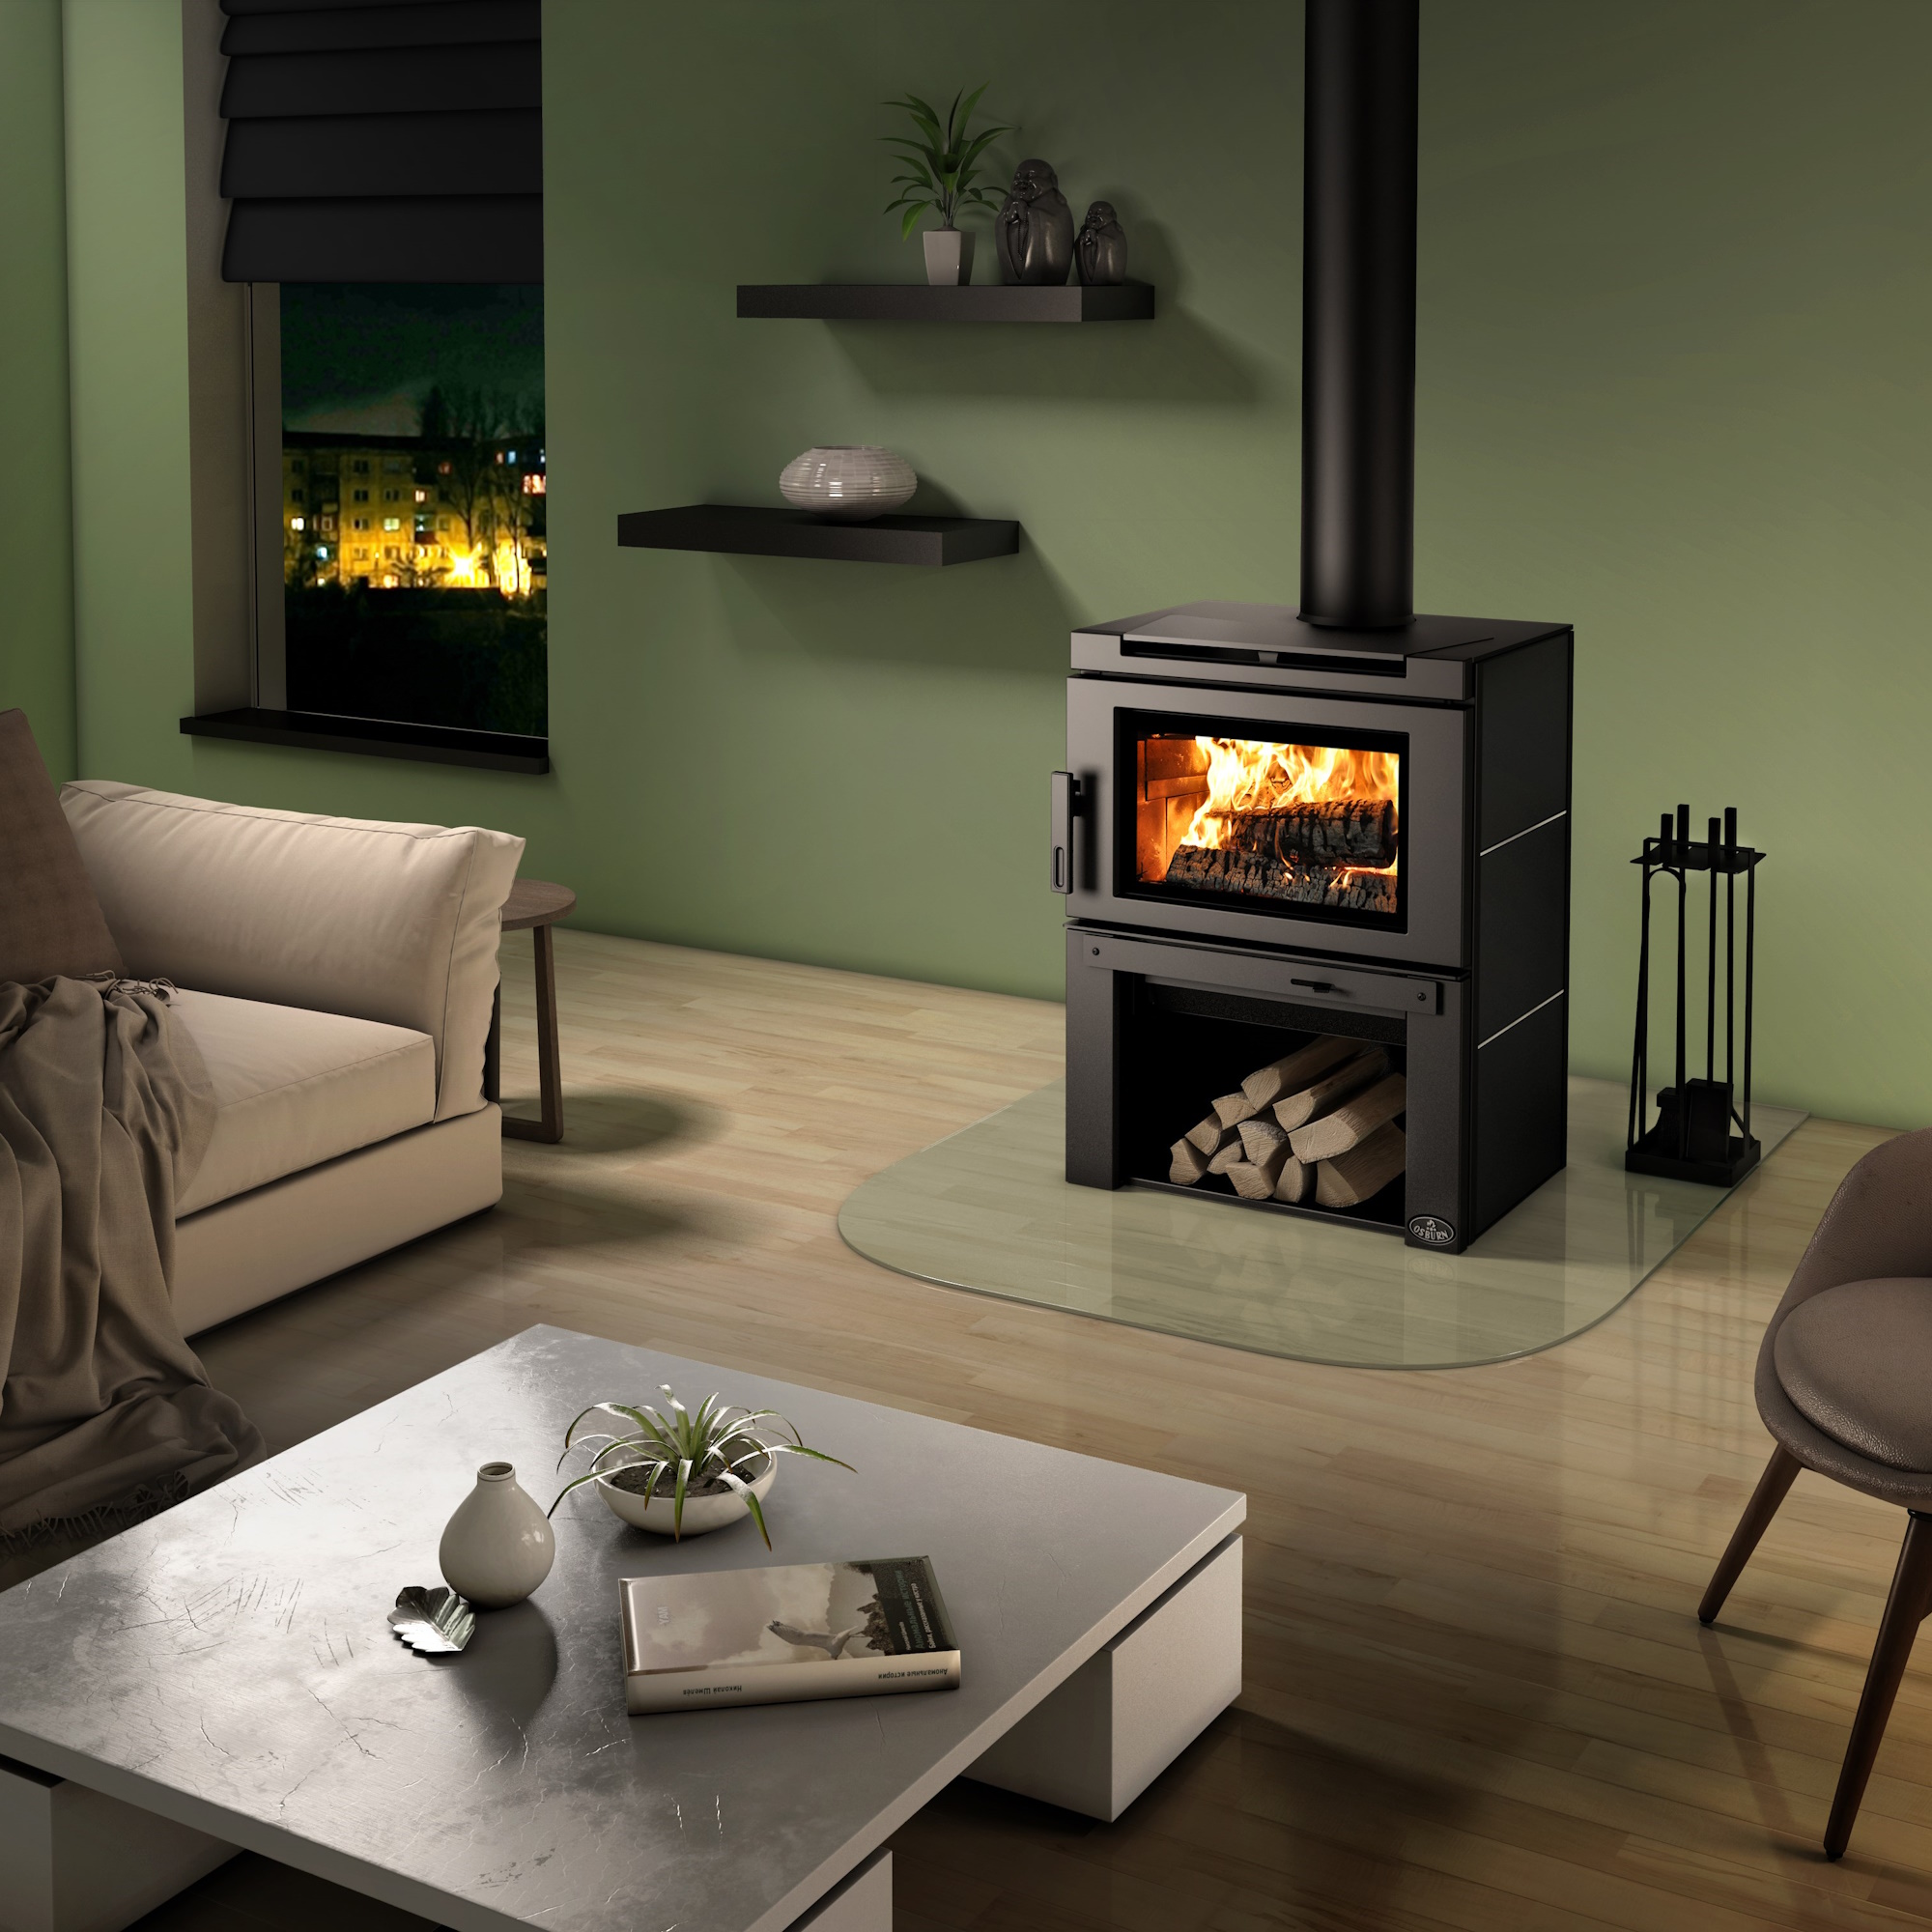 Image Osburn Matrix wood stove with blower                                                                                                                  